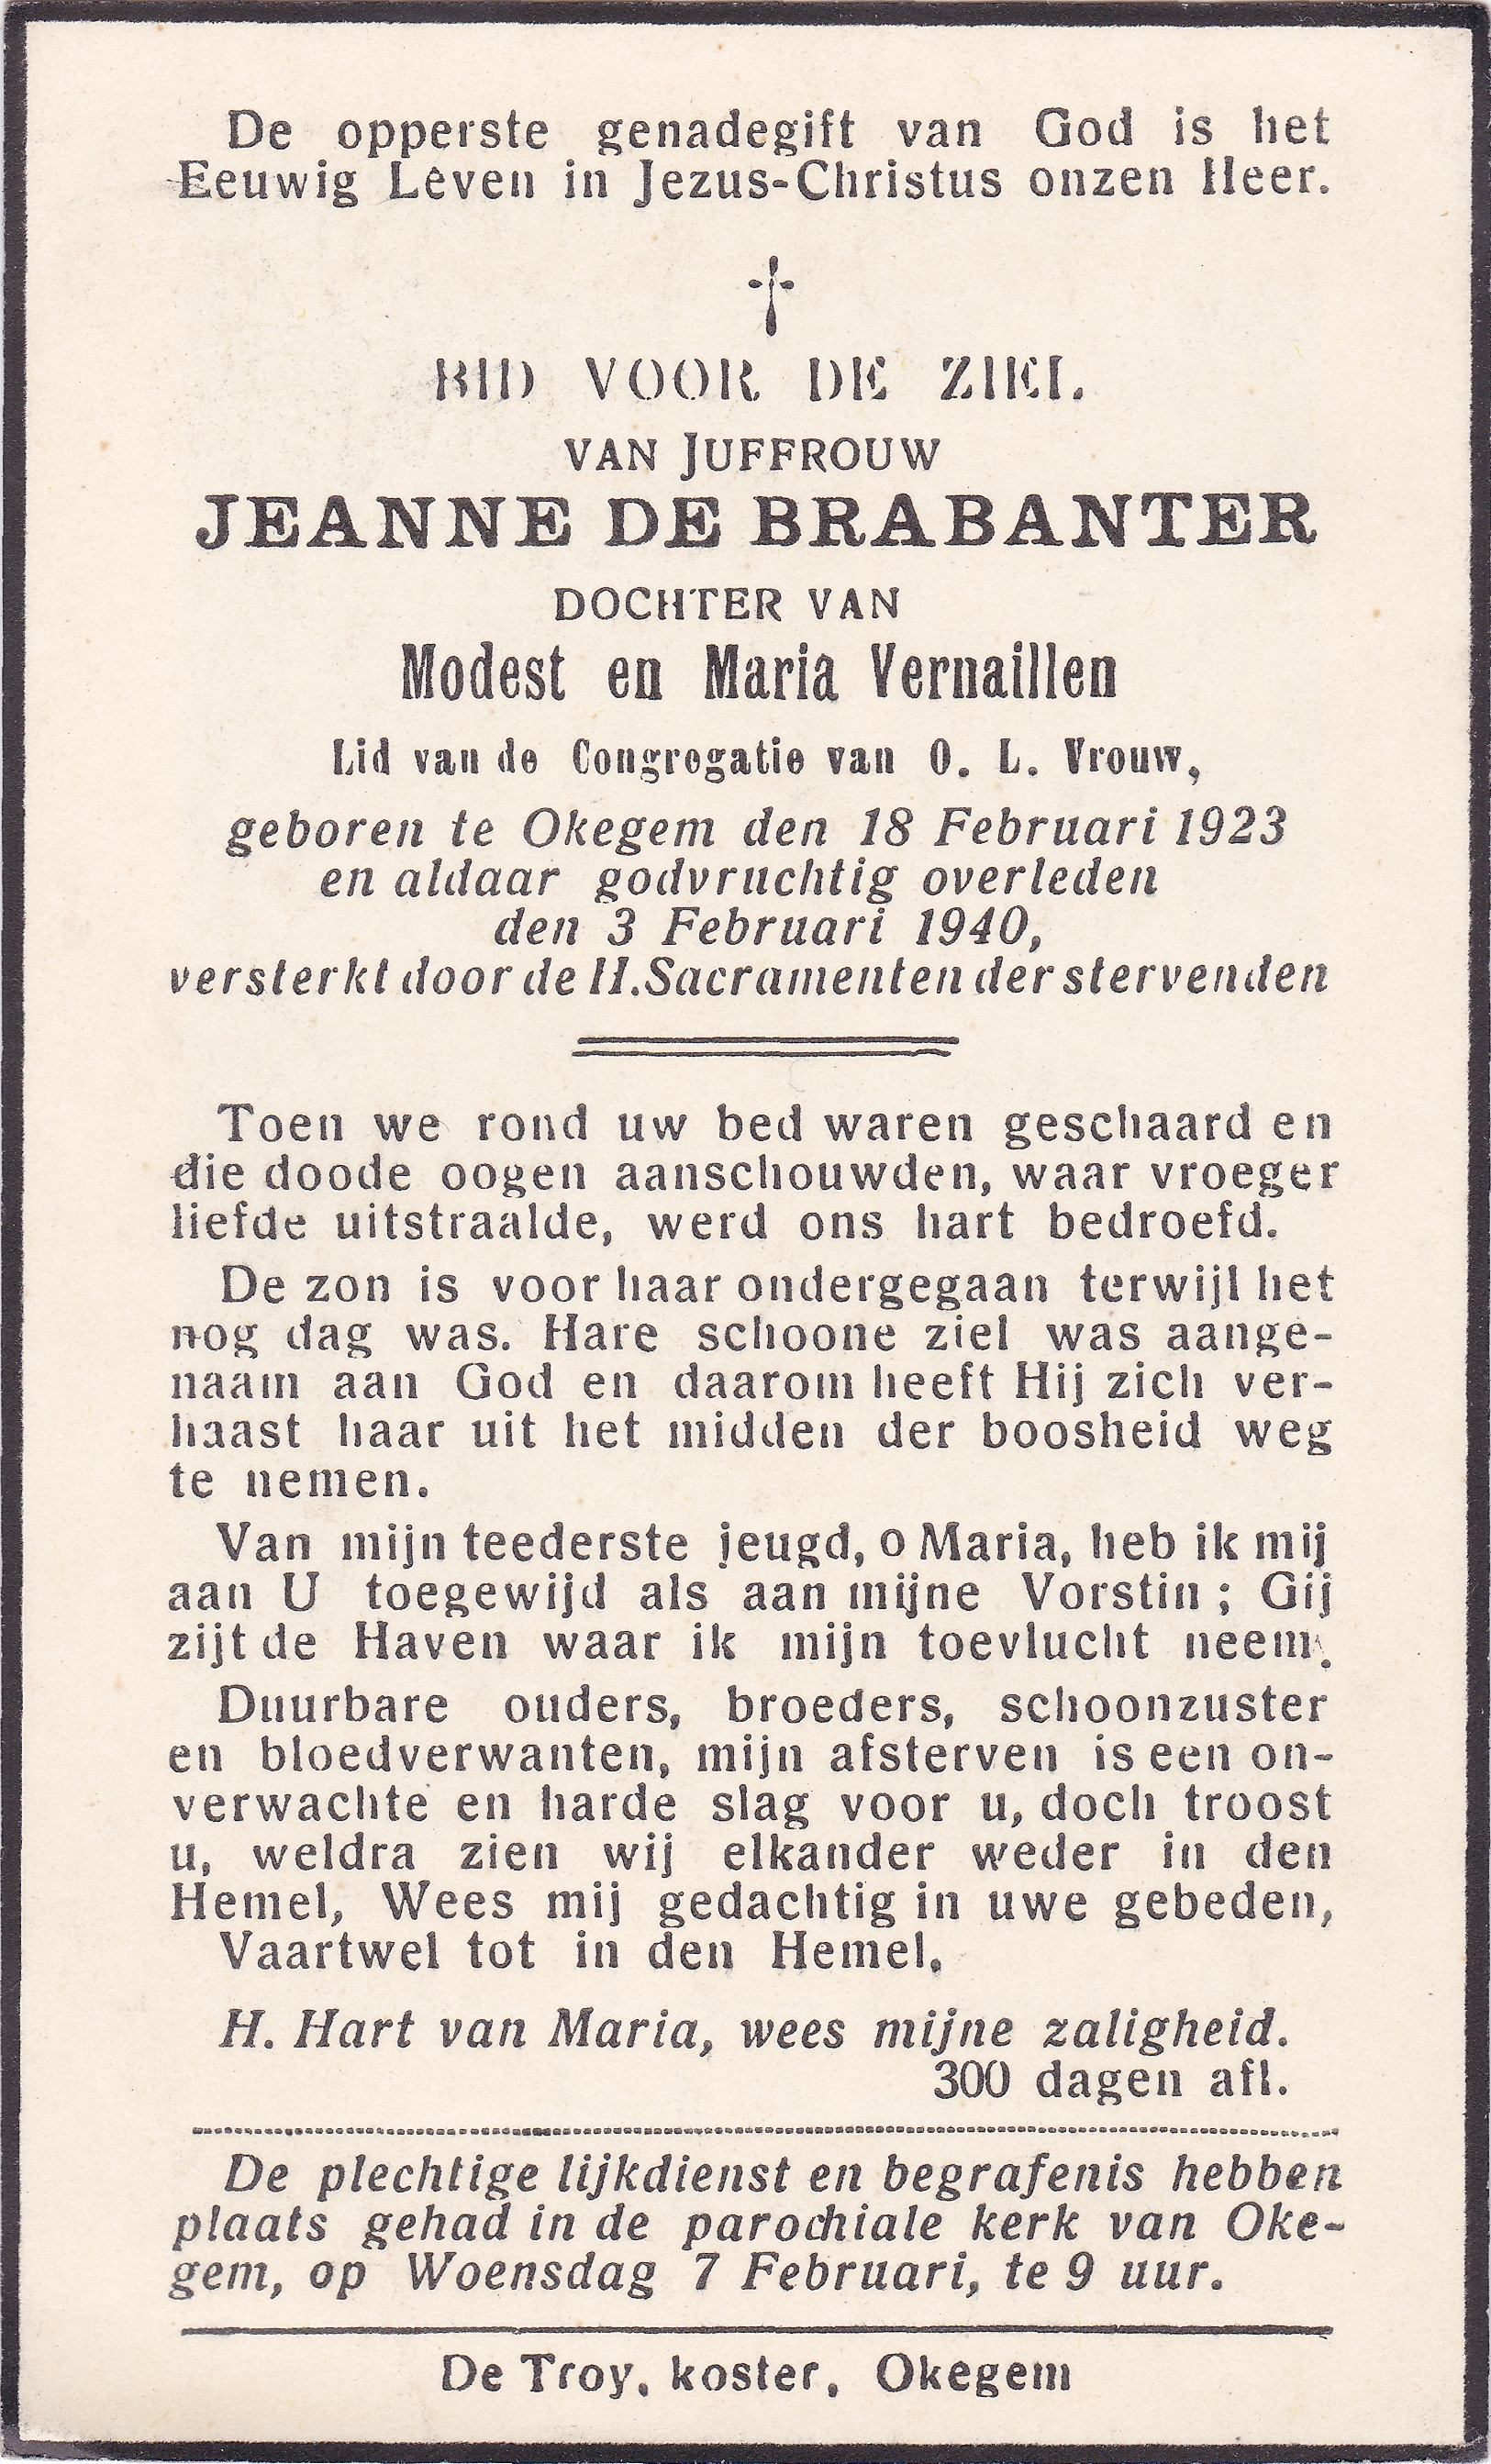 De Brabanter Jeanne